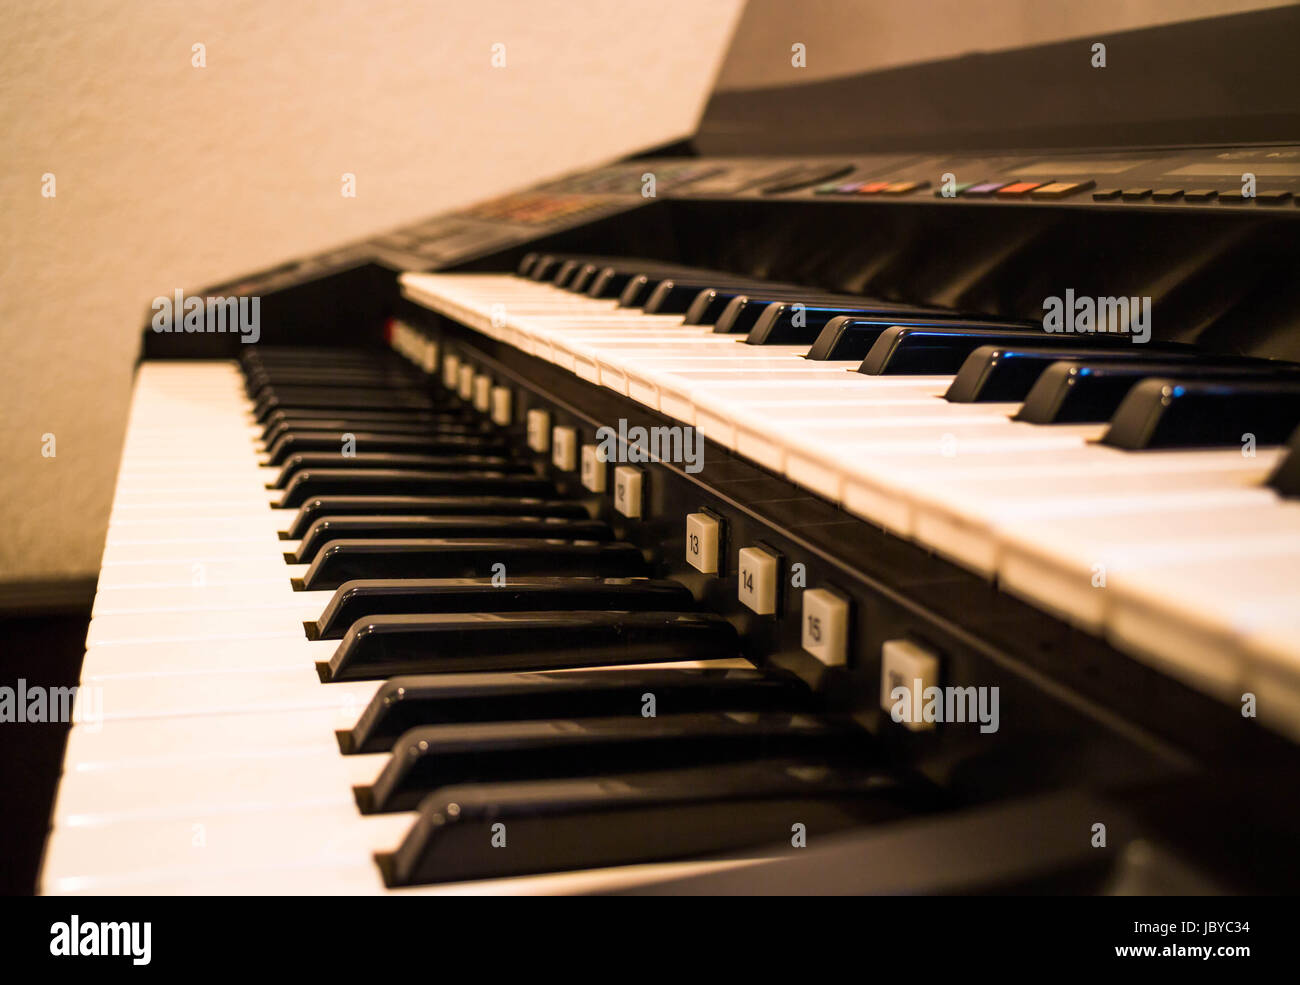 Vintage musical instrument piano keyboard, stock photo Stock Photo